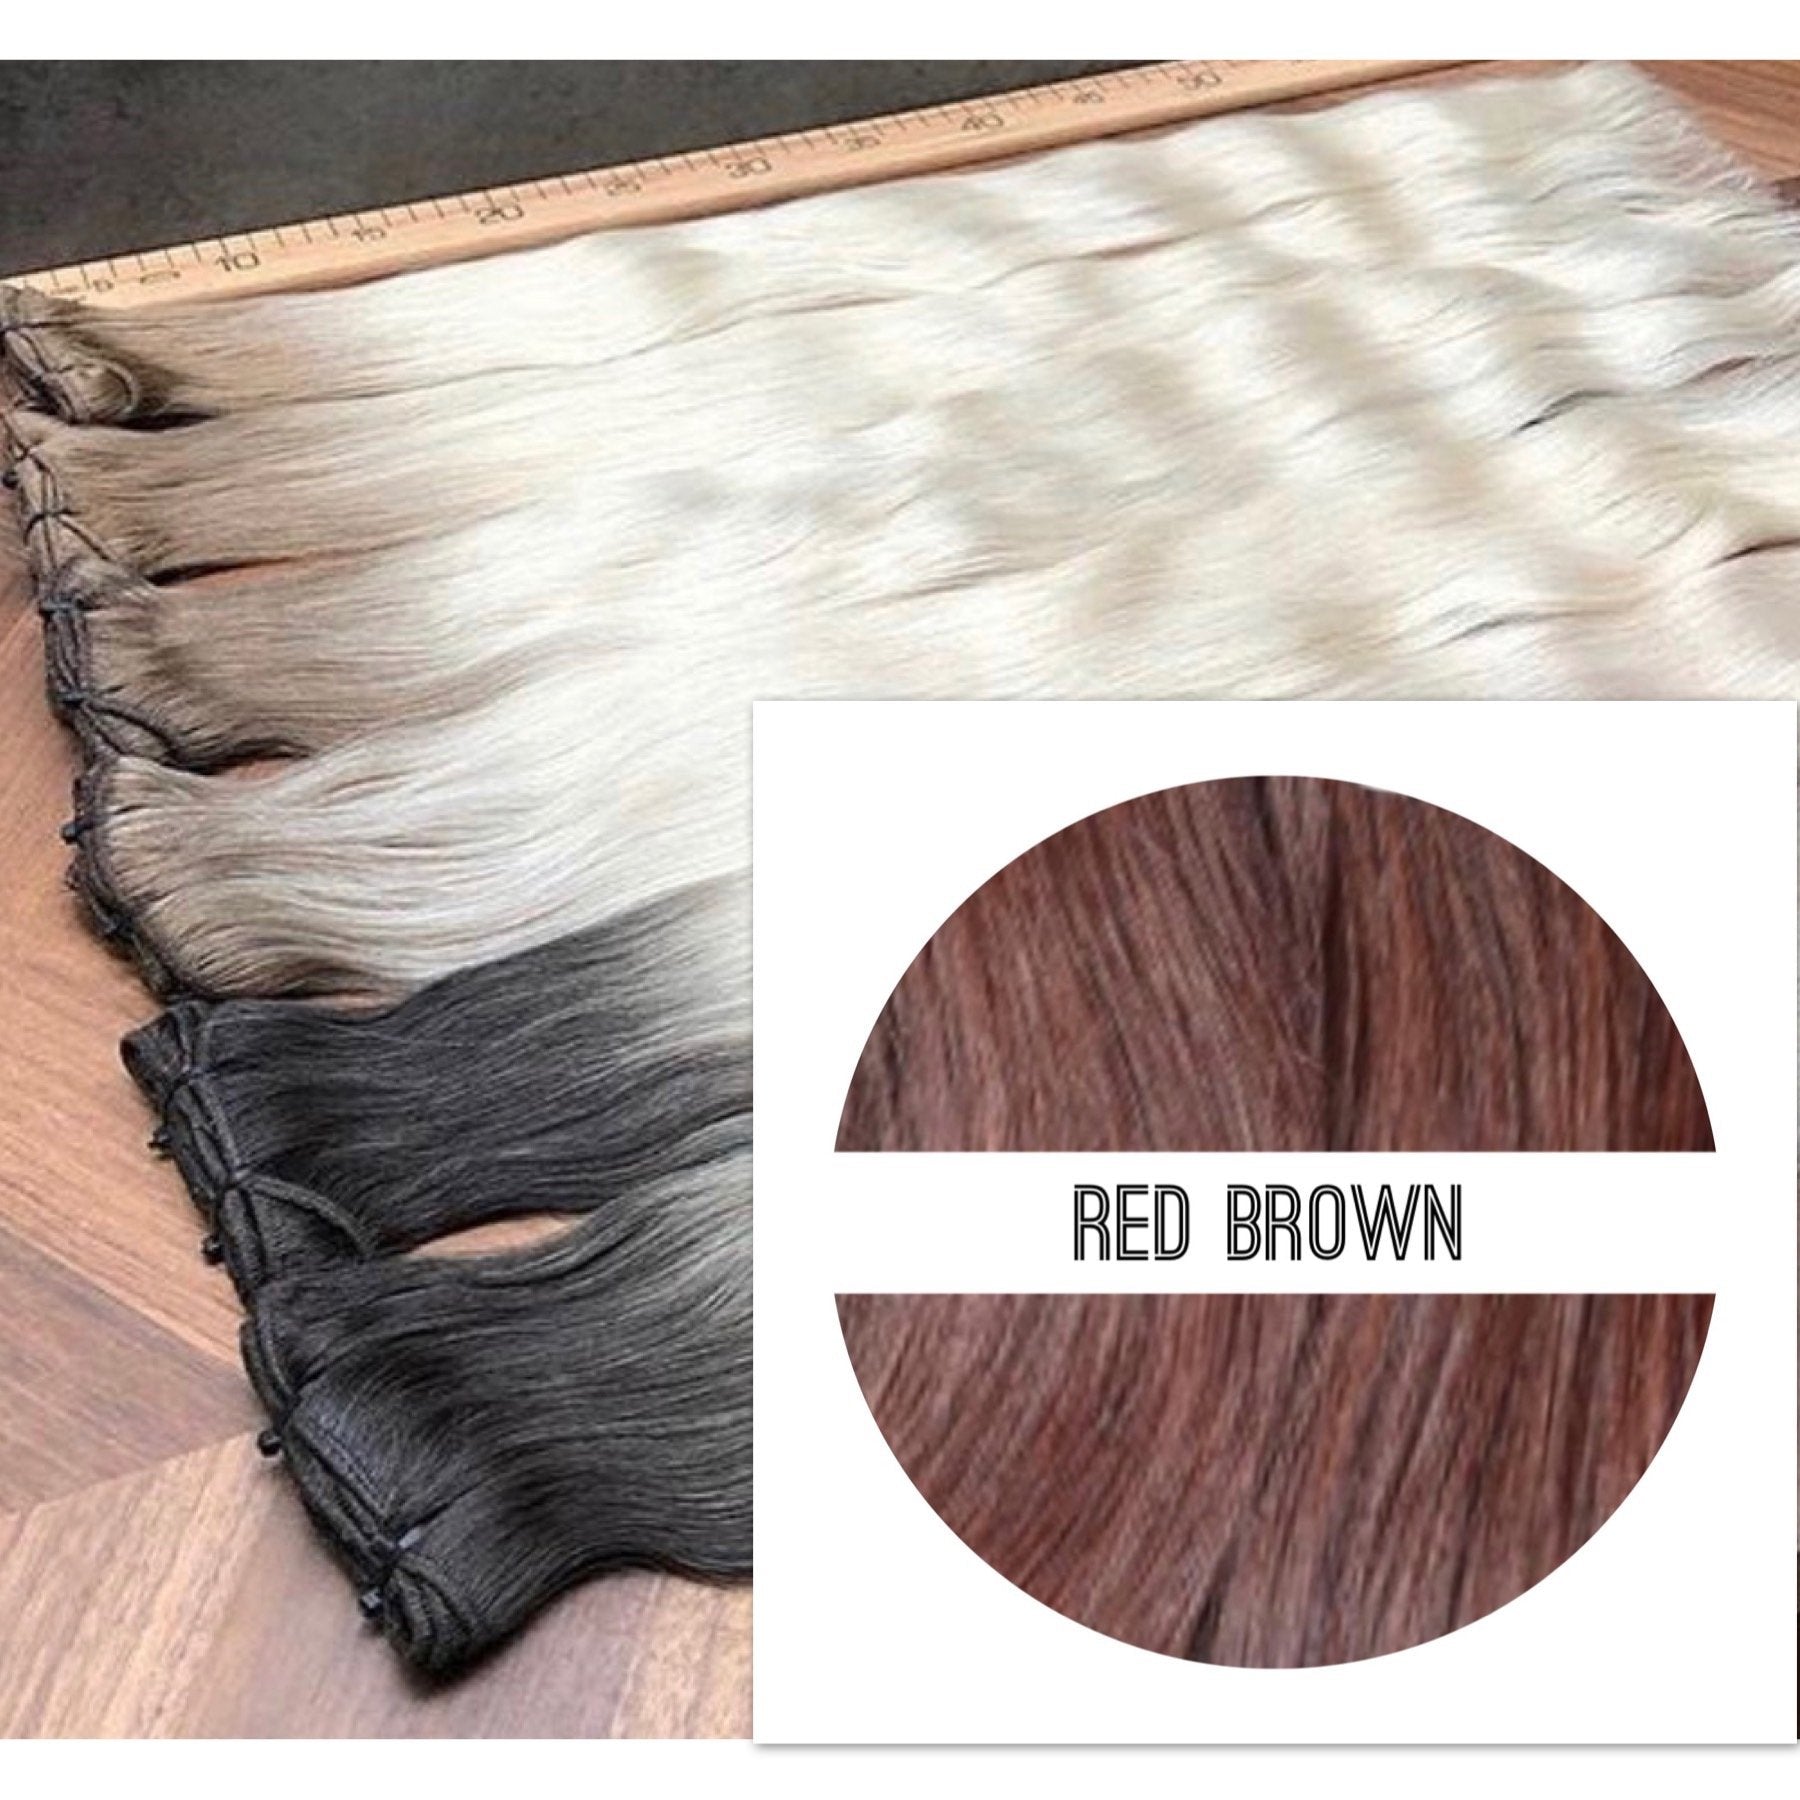 Wefts Colors Red Brown GVA hair_Retail price - GVA hair